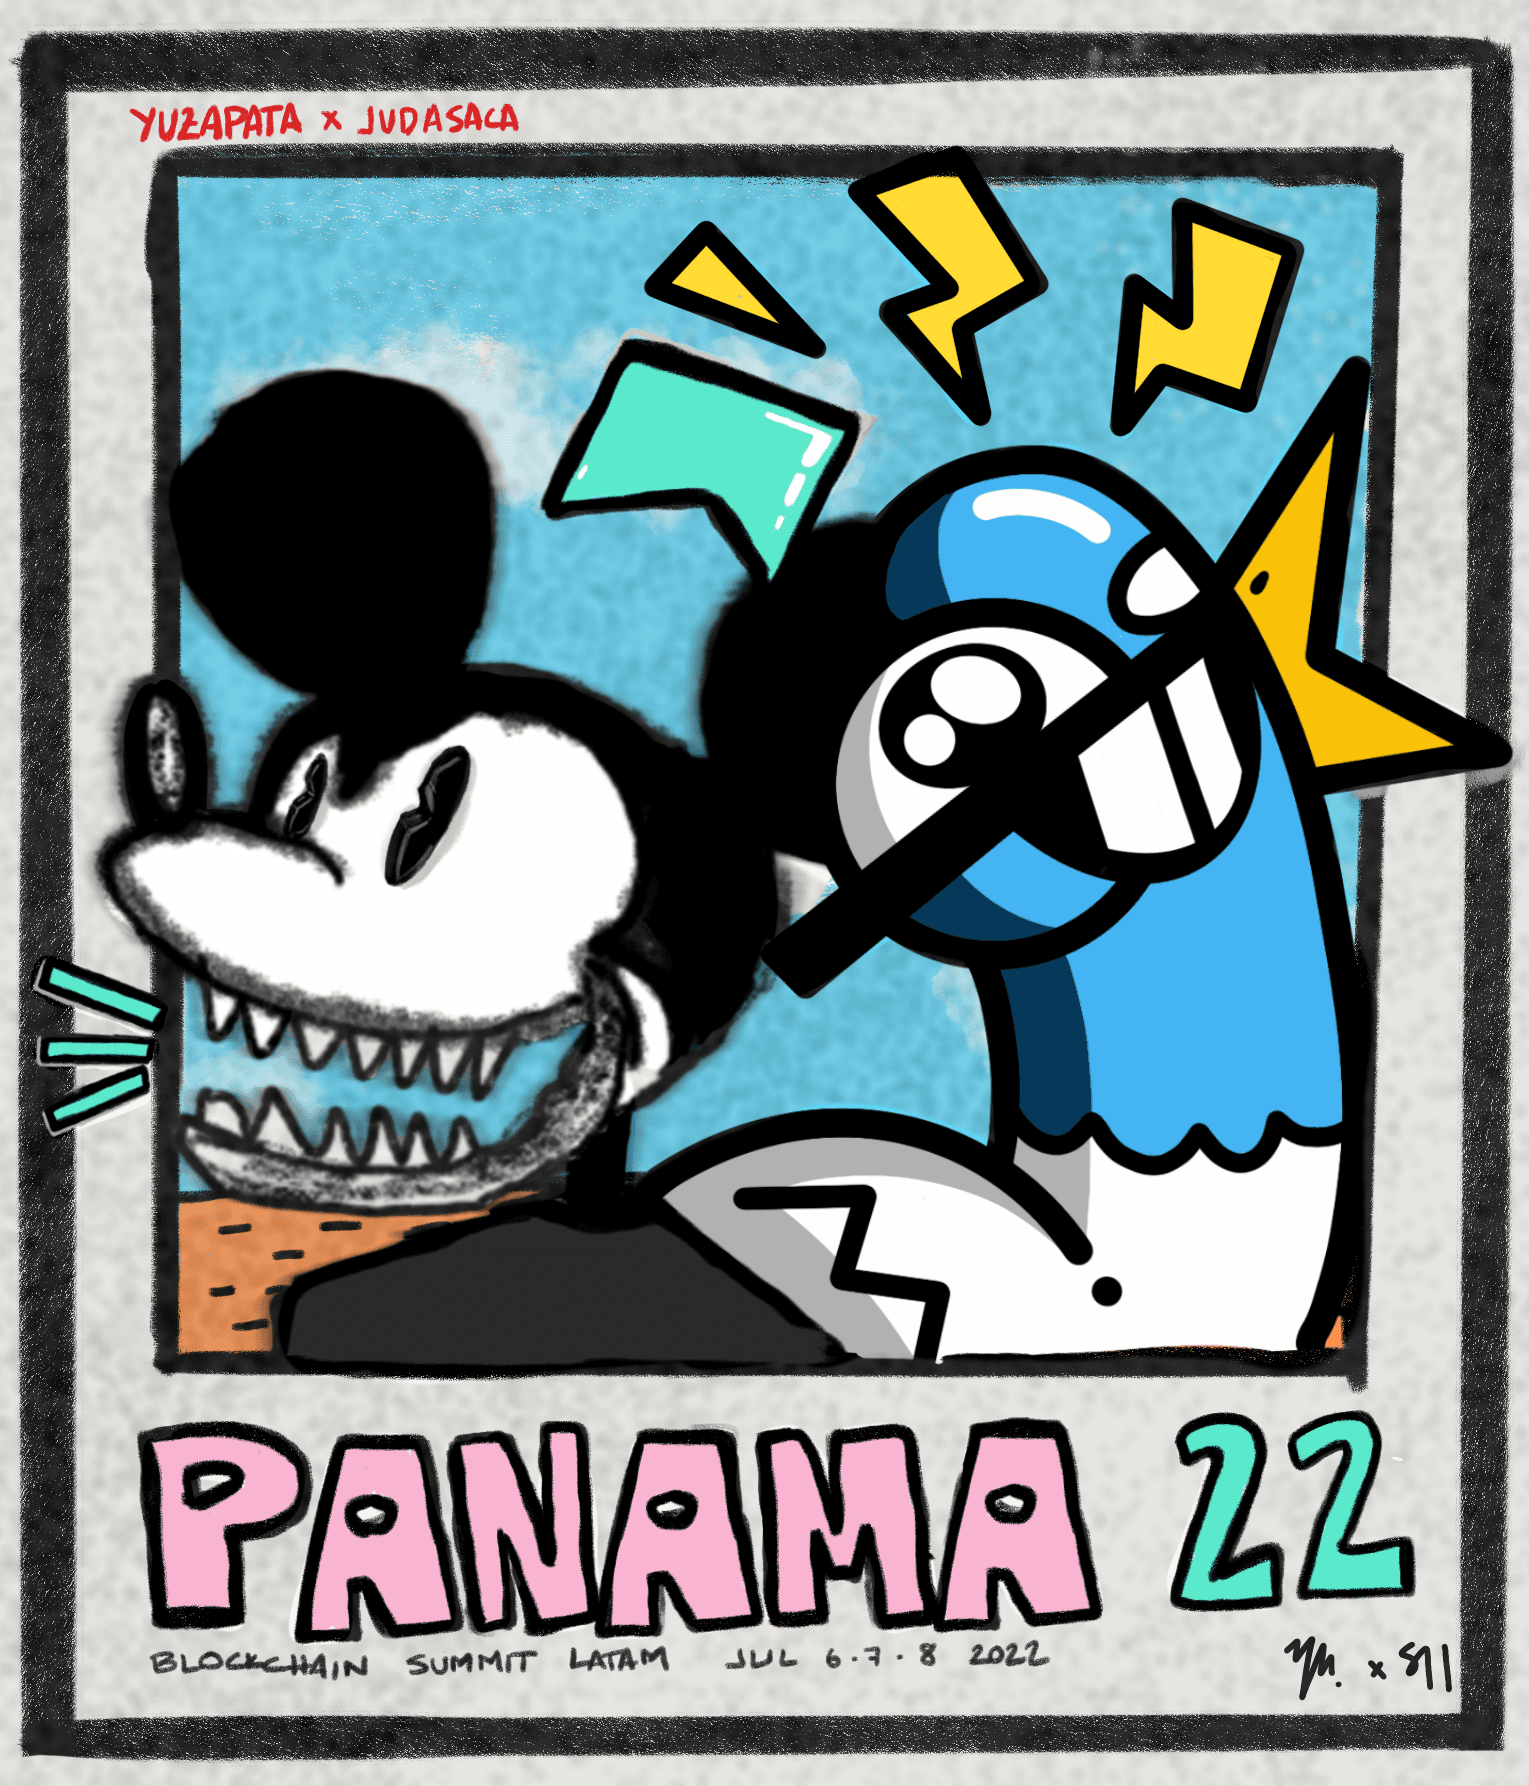 Panama 22 (Judasaca x YuZapata)